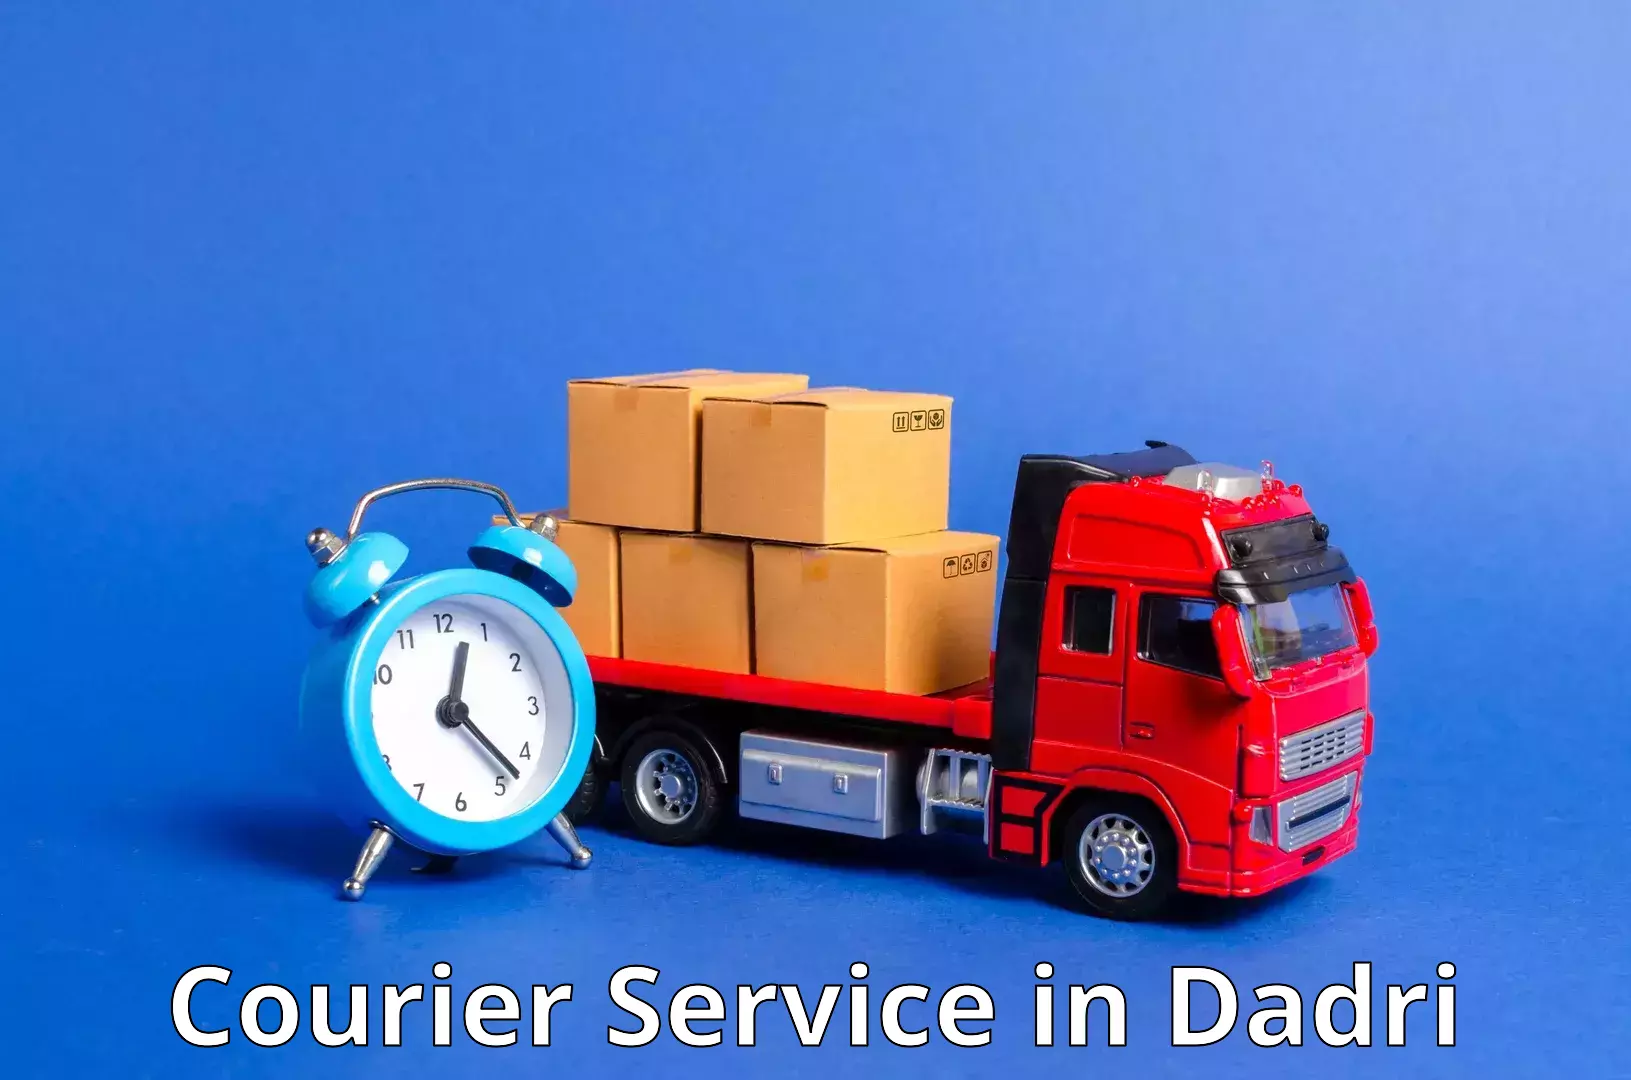 Professional parcel services in Dadri